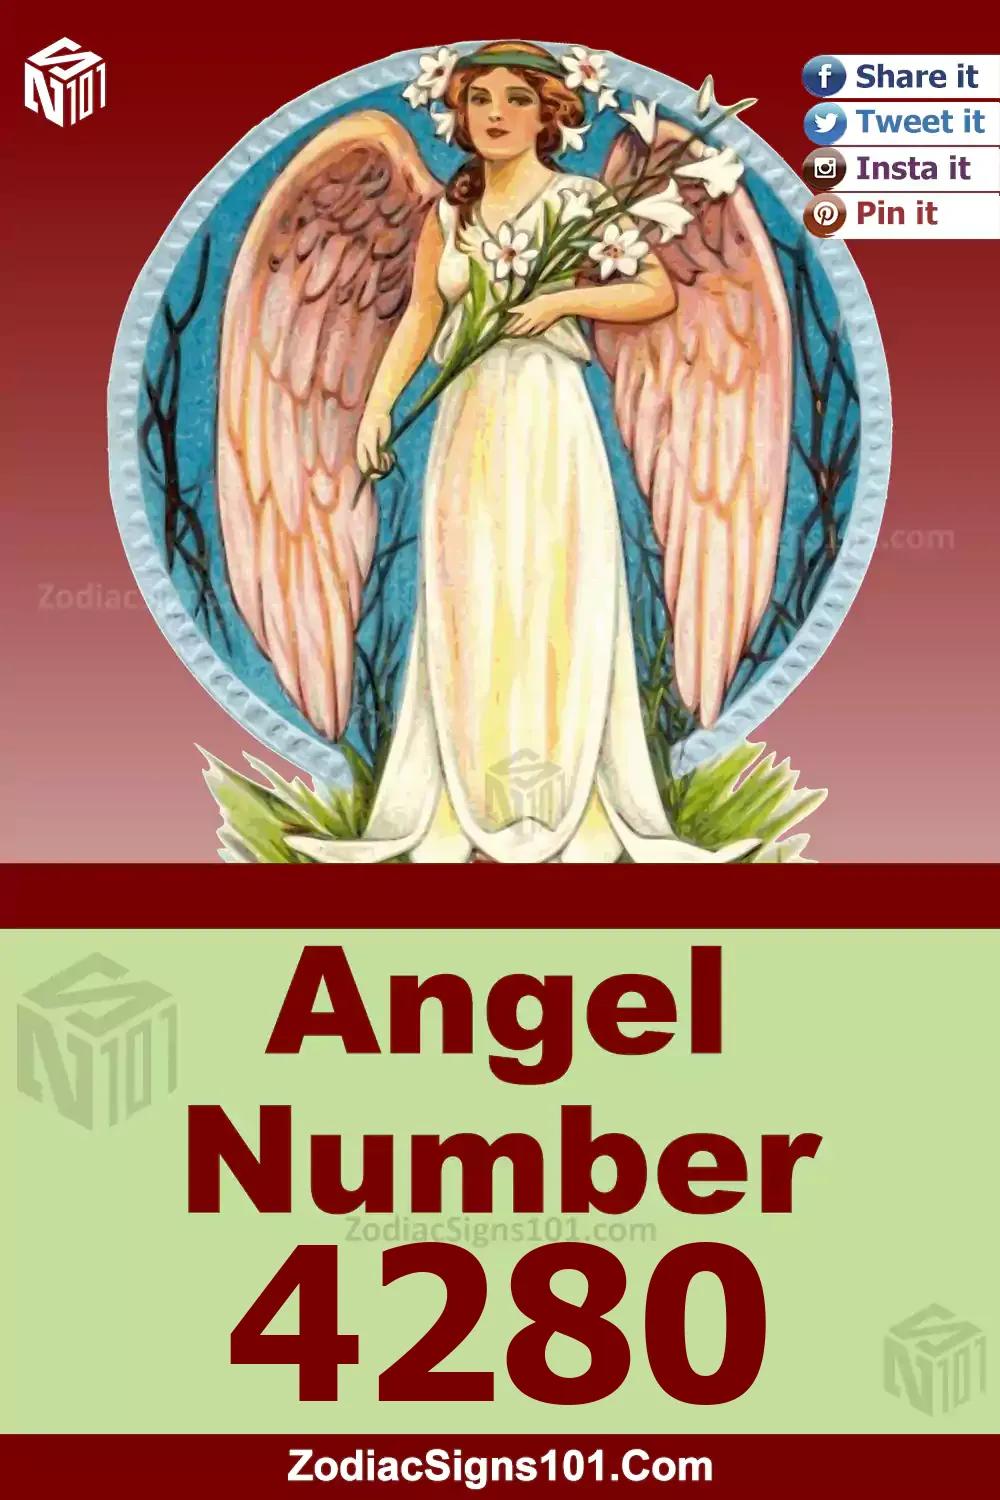 4280-Angel-Number-Meaning.jpg